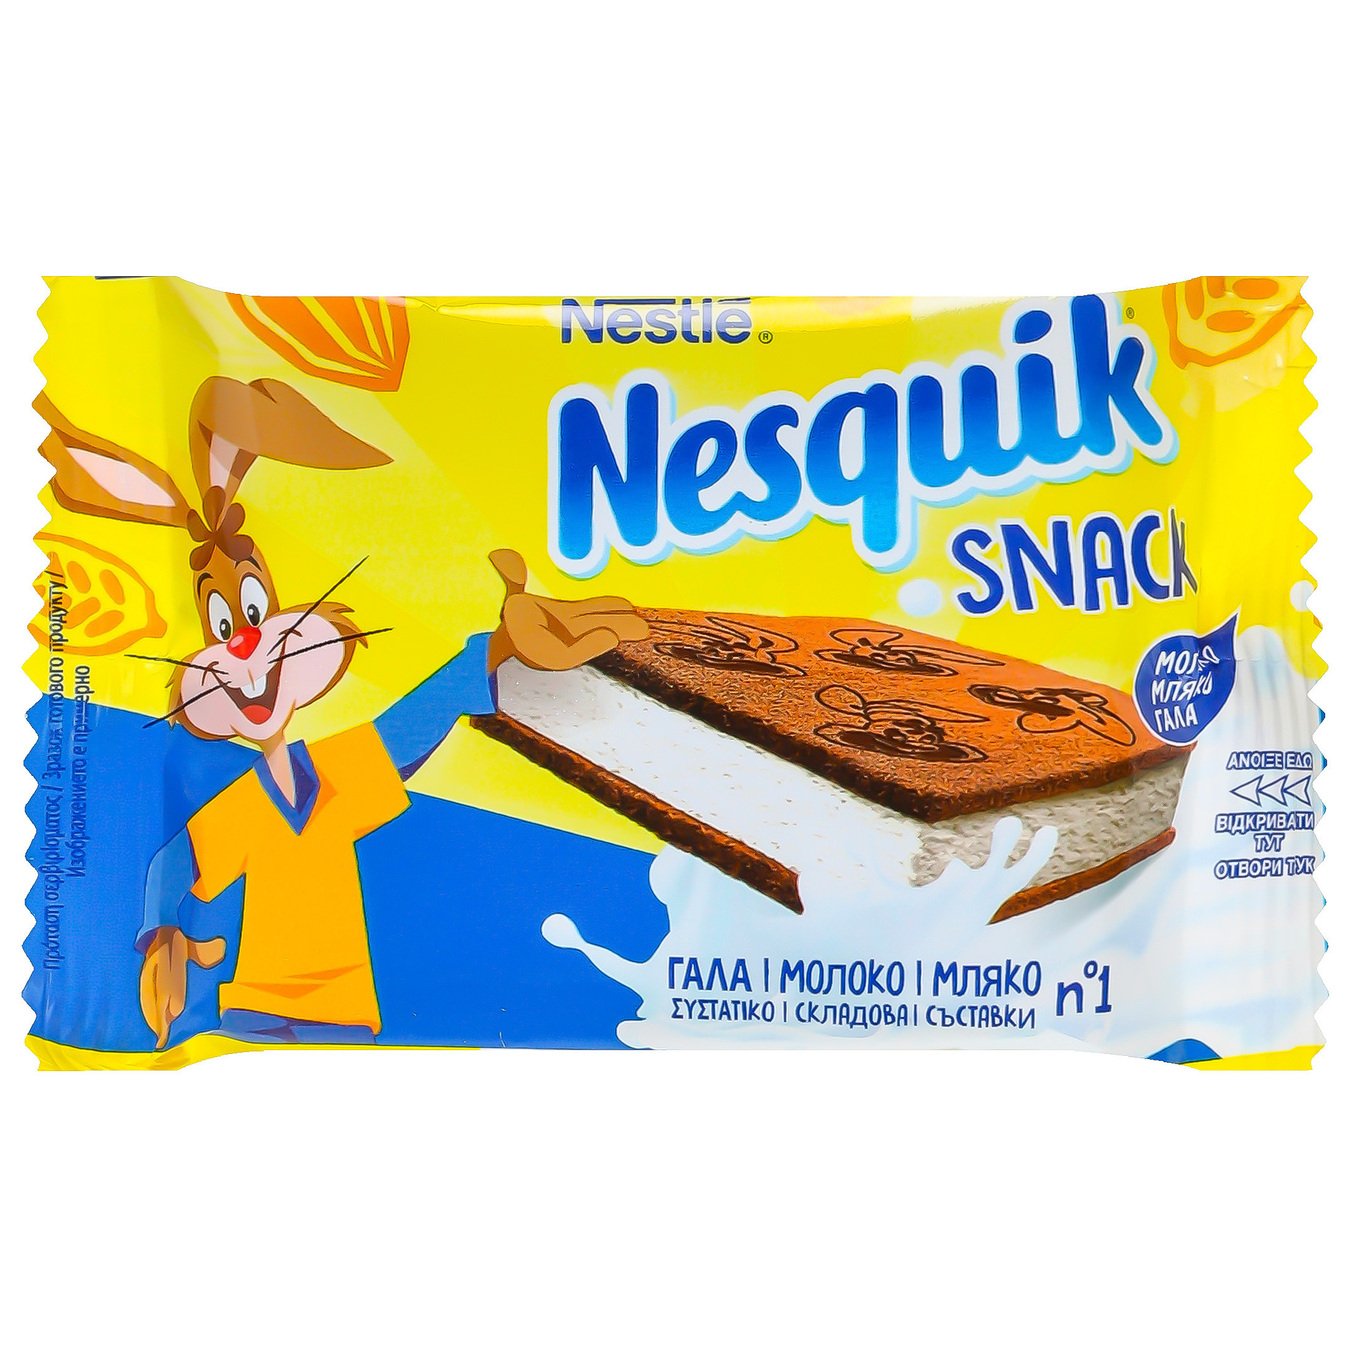 Nesquik Snack Biscuit cake Lapte-milk with milk filling 26g 2